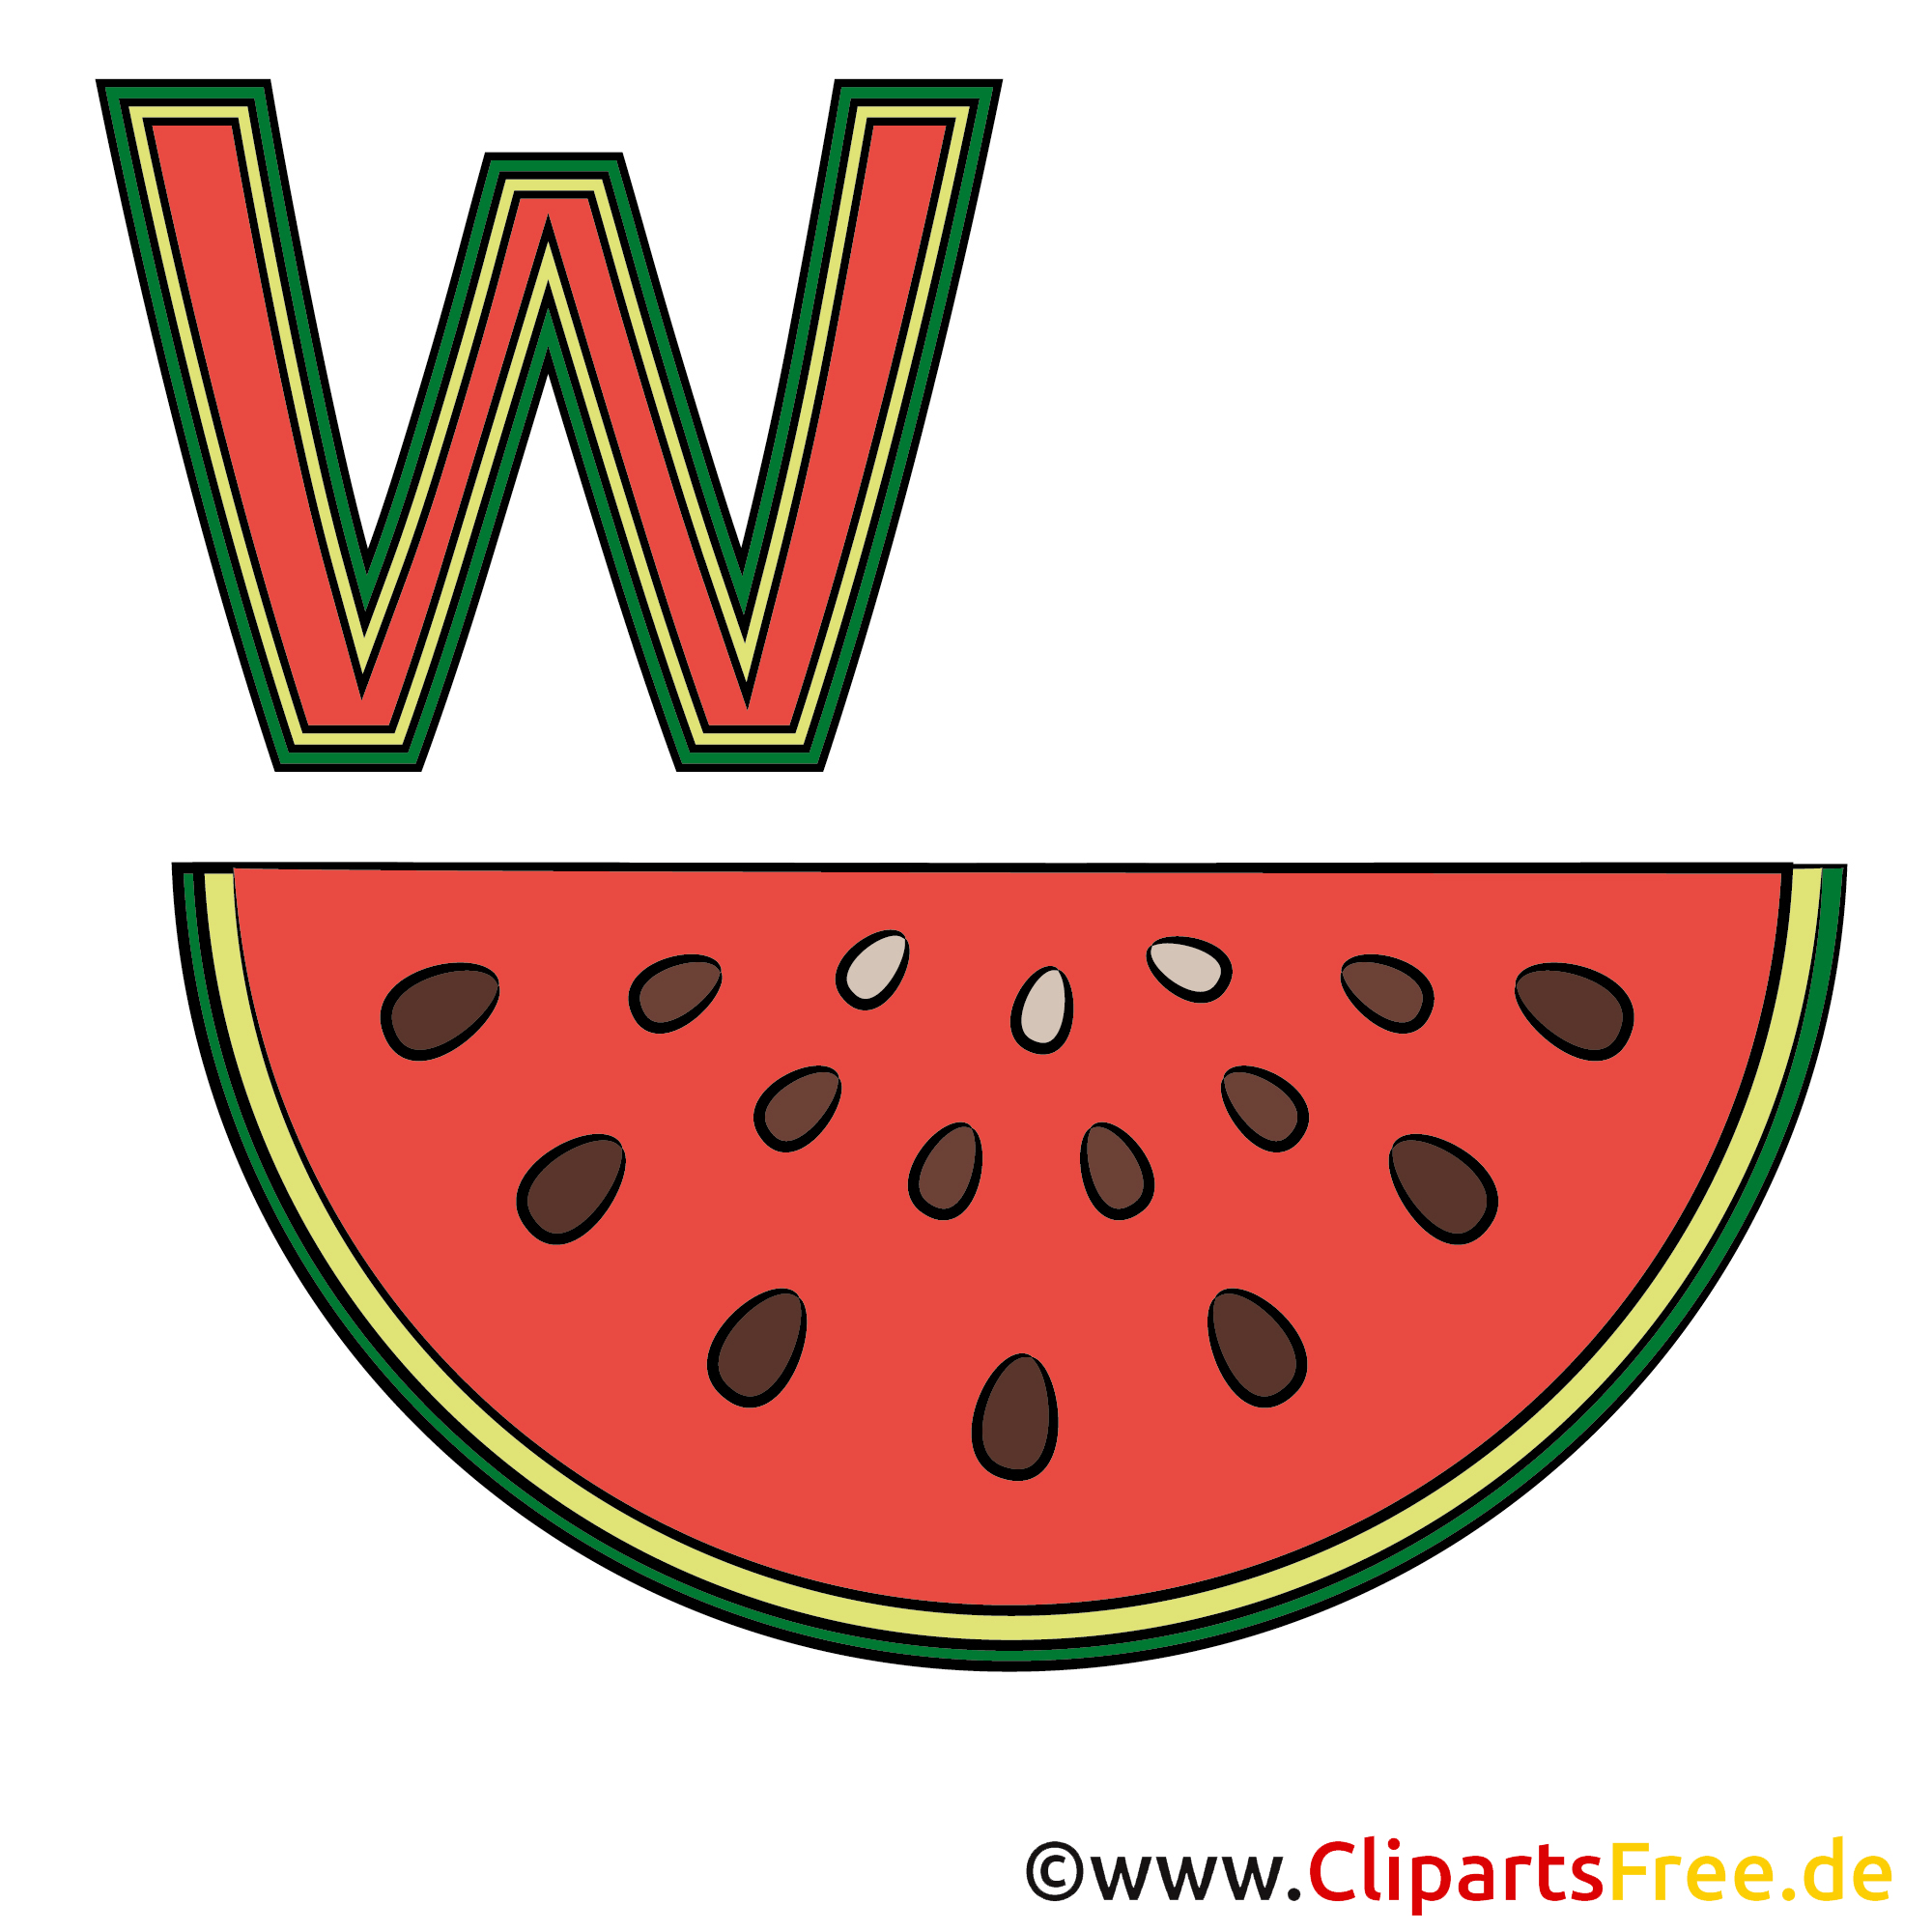 Learn German - Wassermelone Bild für Grundschule